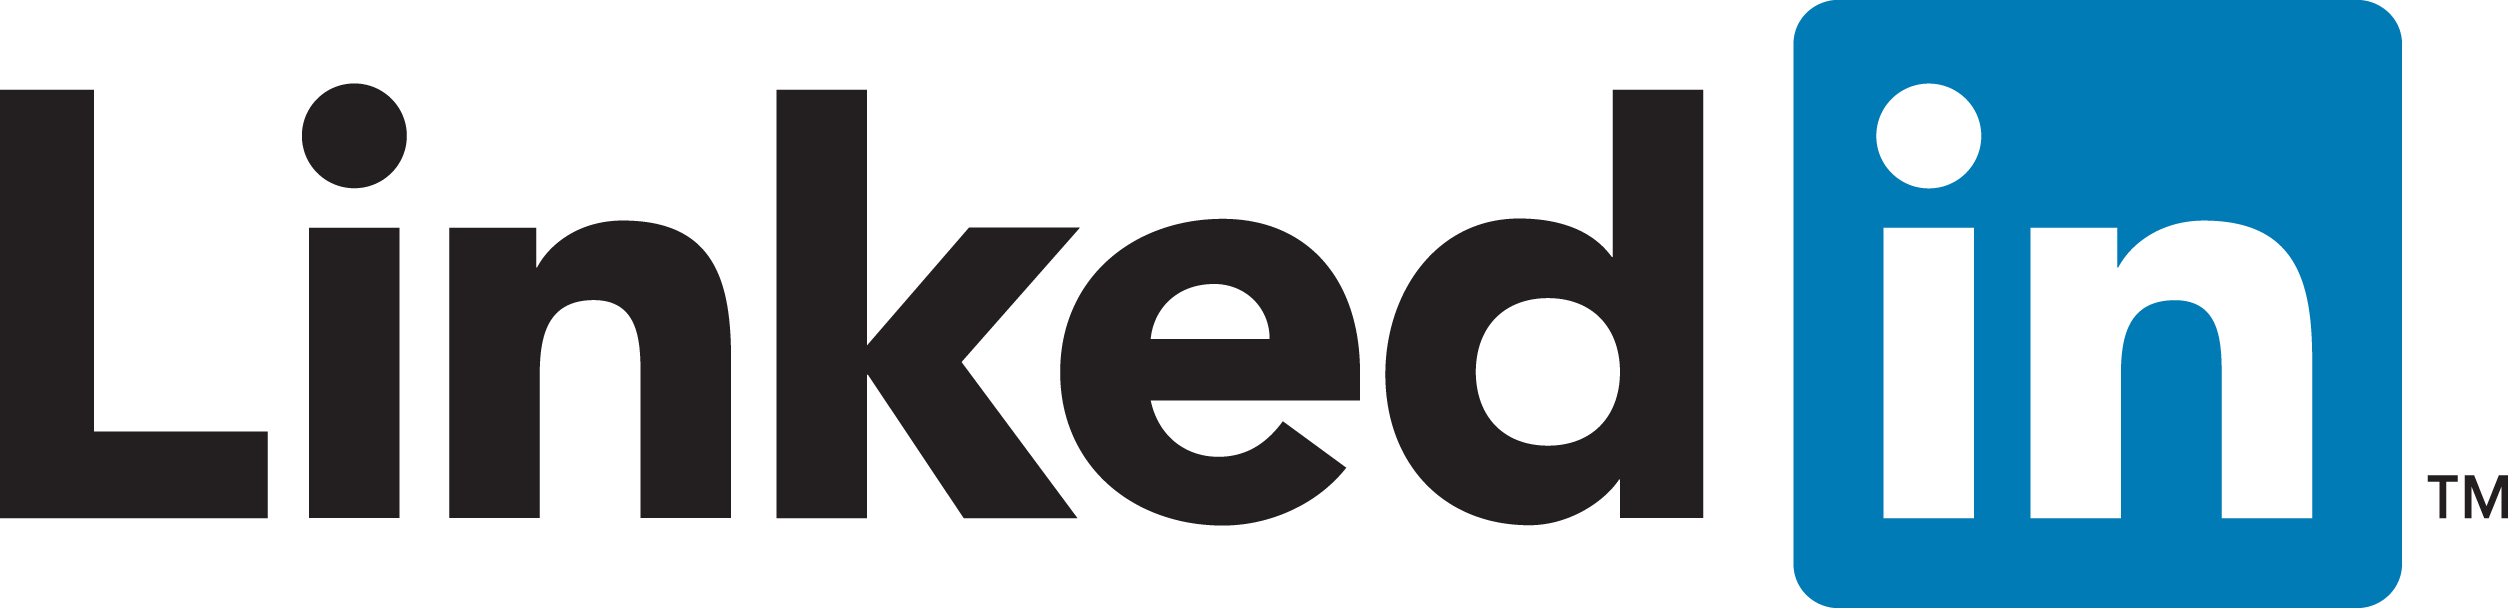 linkedin logo 2c